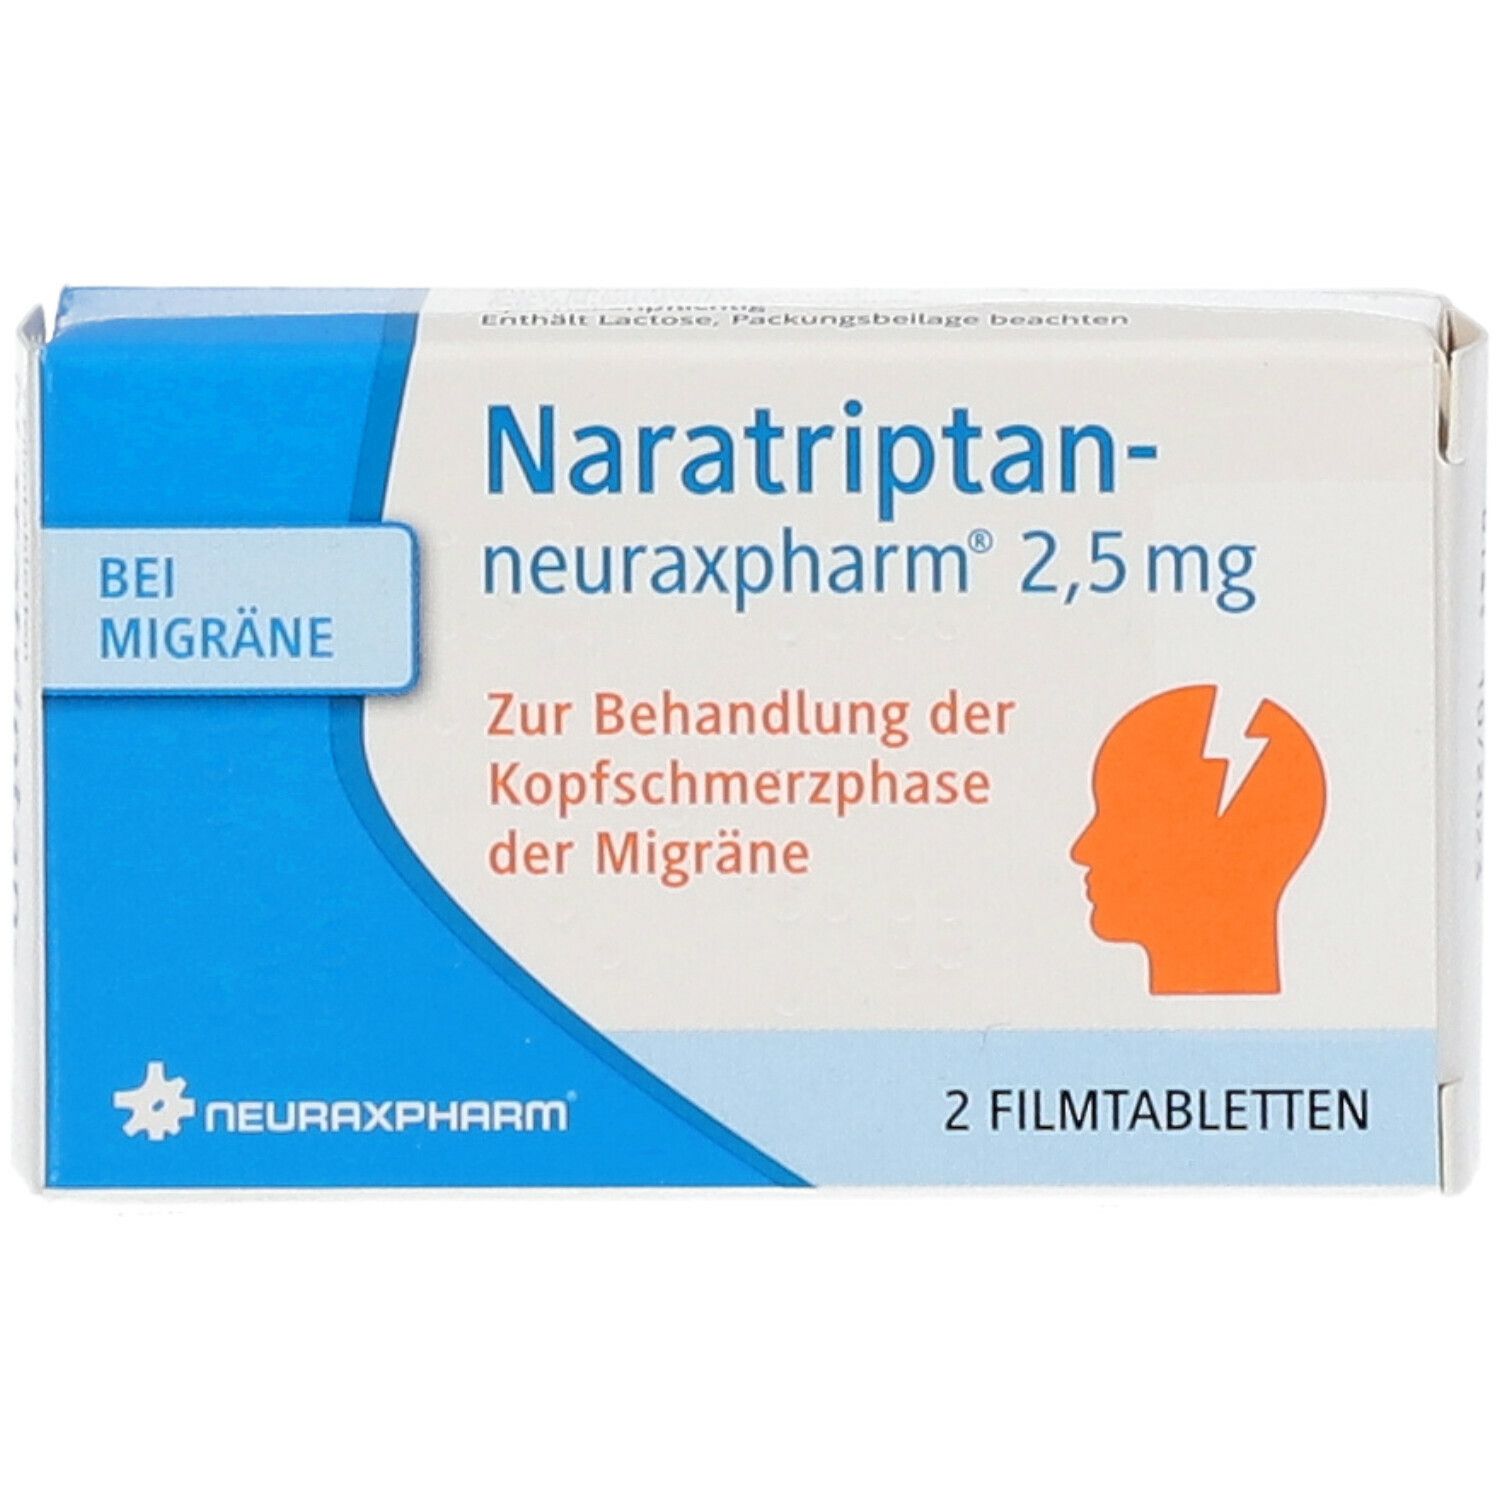 Naratriptan-neuraxpharm® 2,5 mg